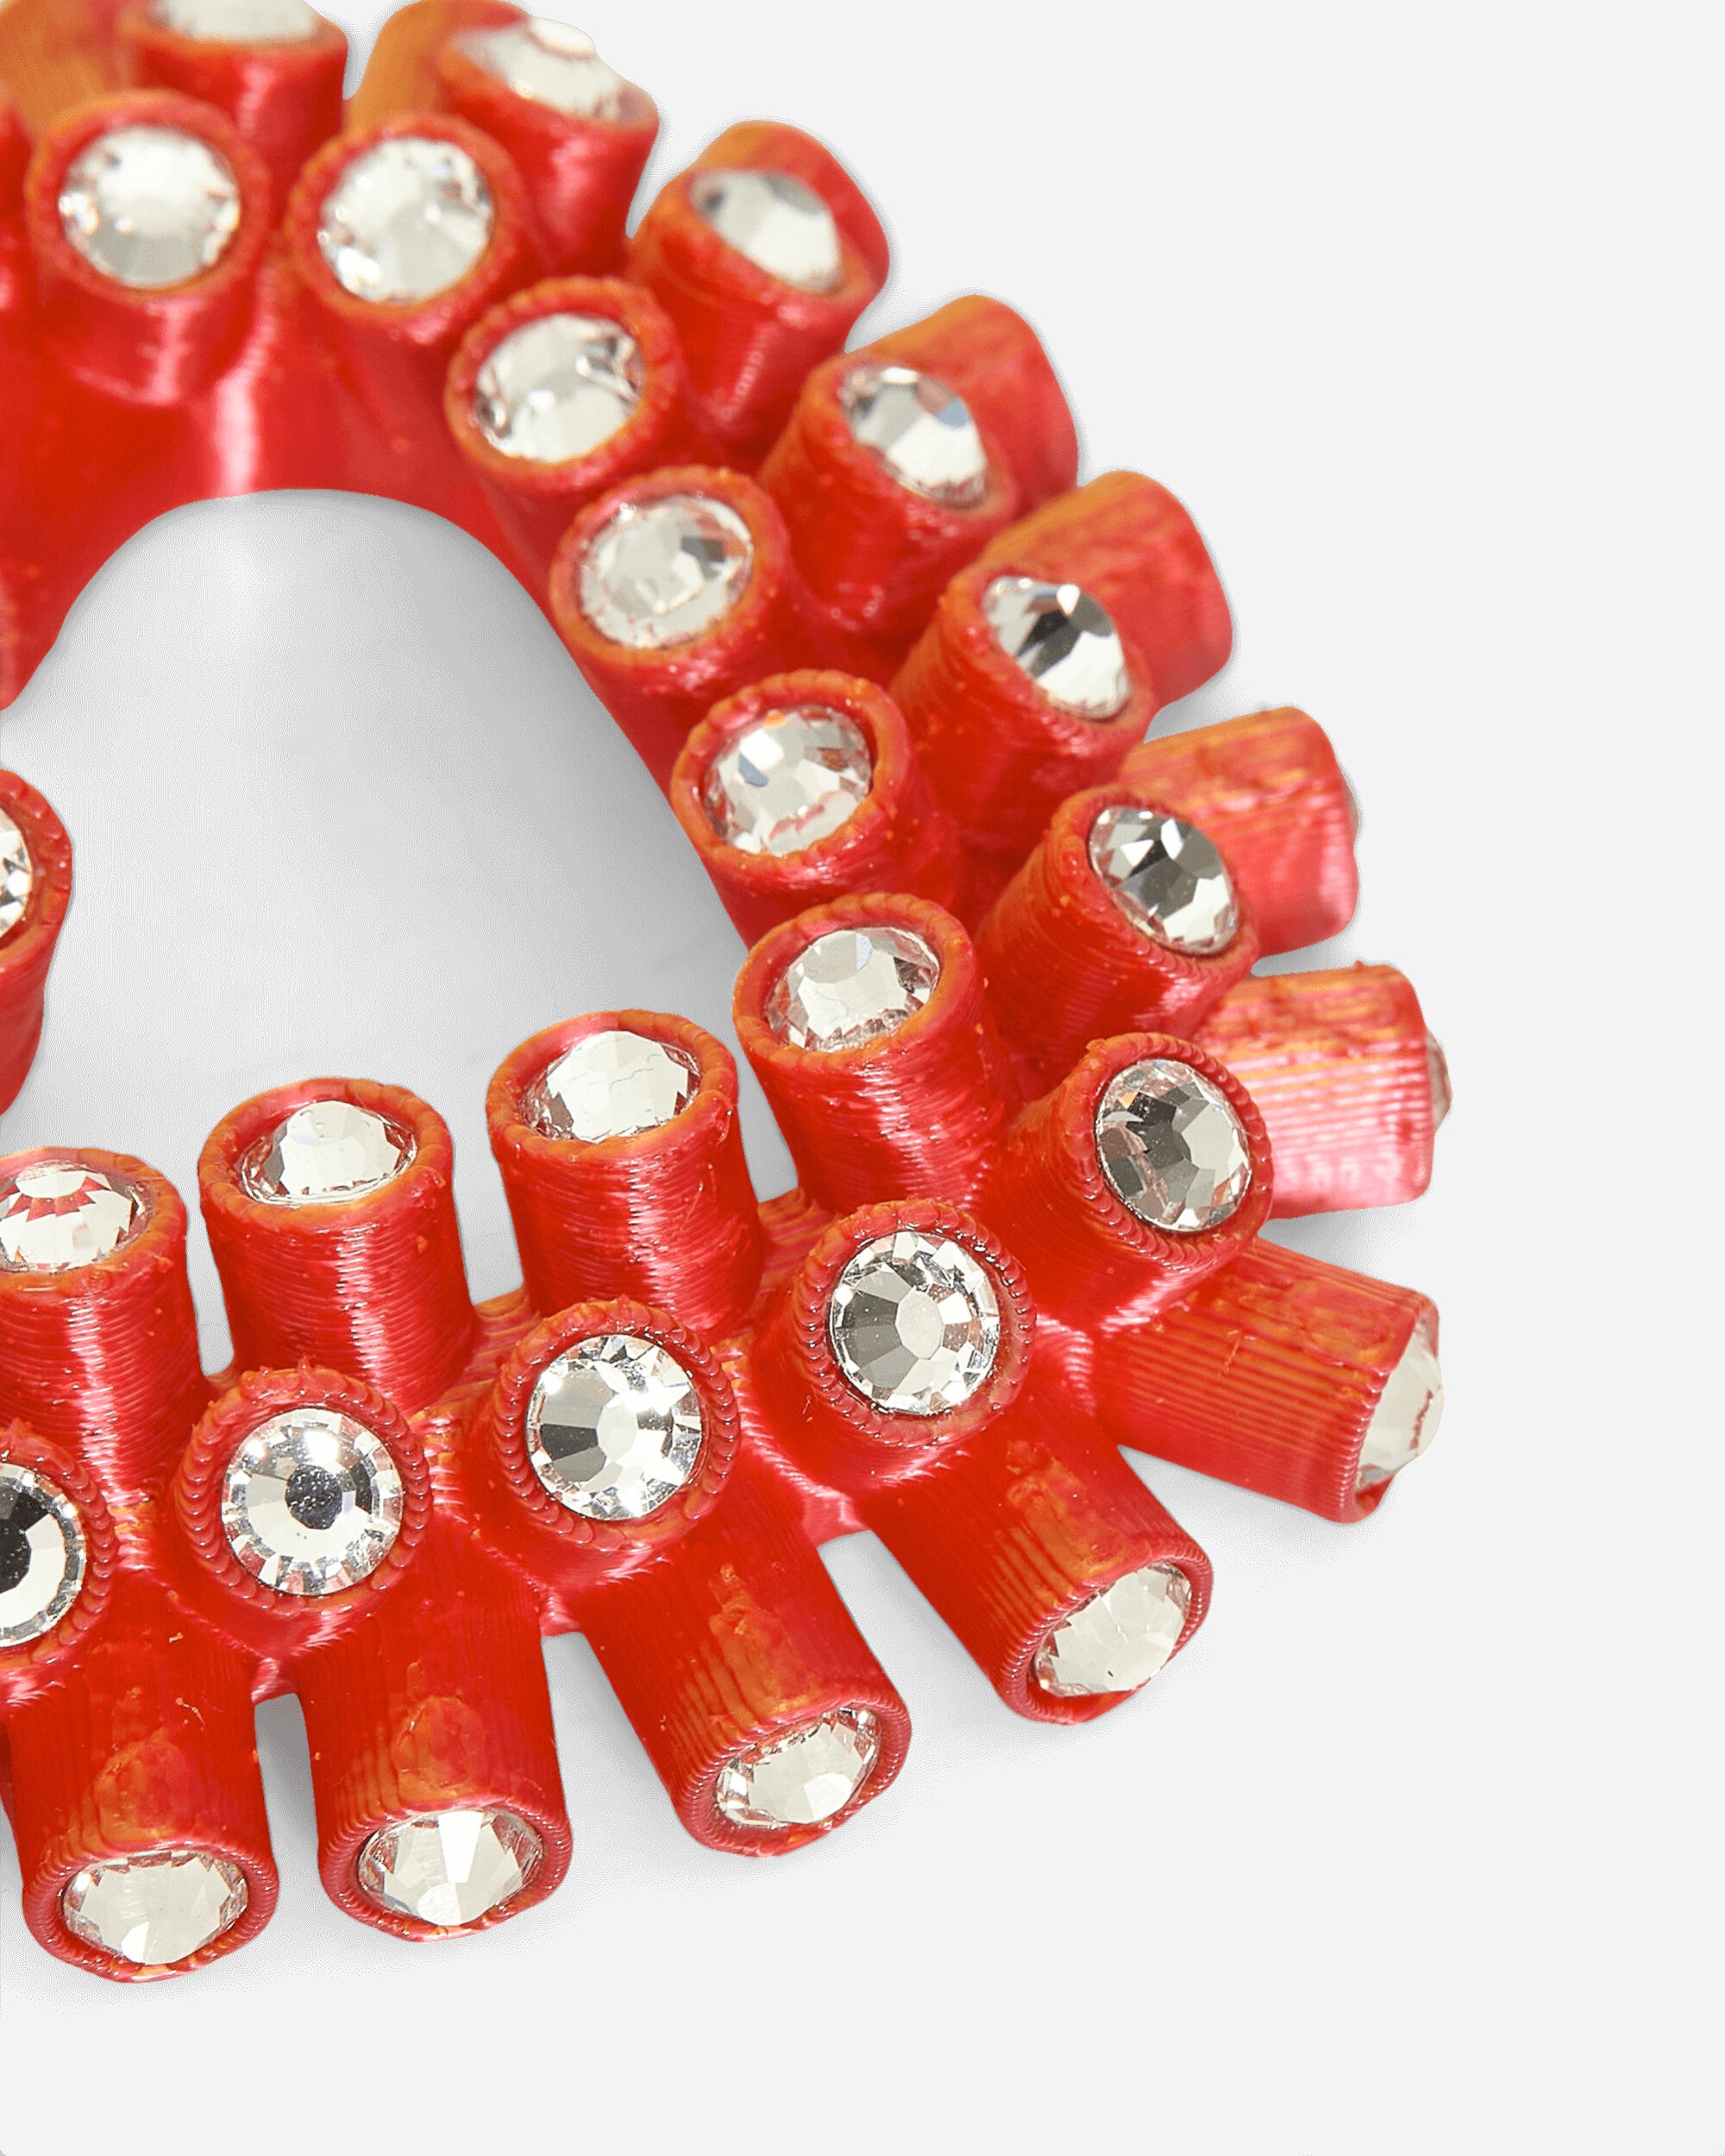 Roussey Wmns Small Bae Hoops Orange Taffetas Jewellery Earrings F22E03 1